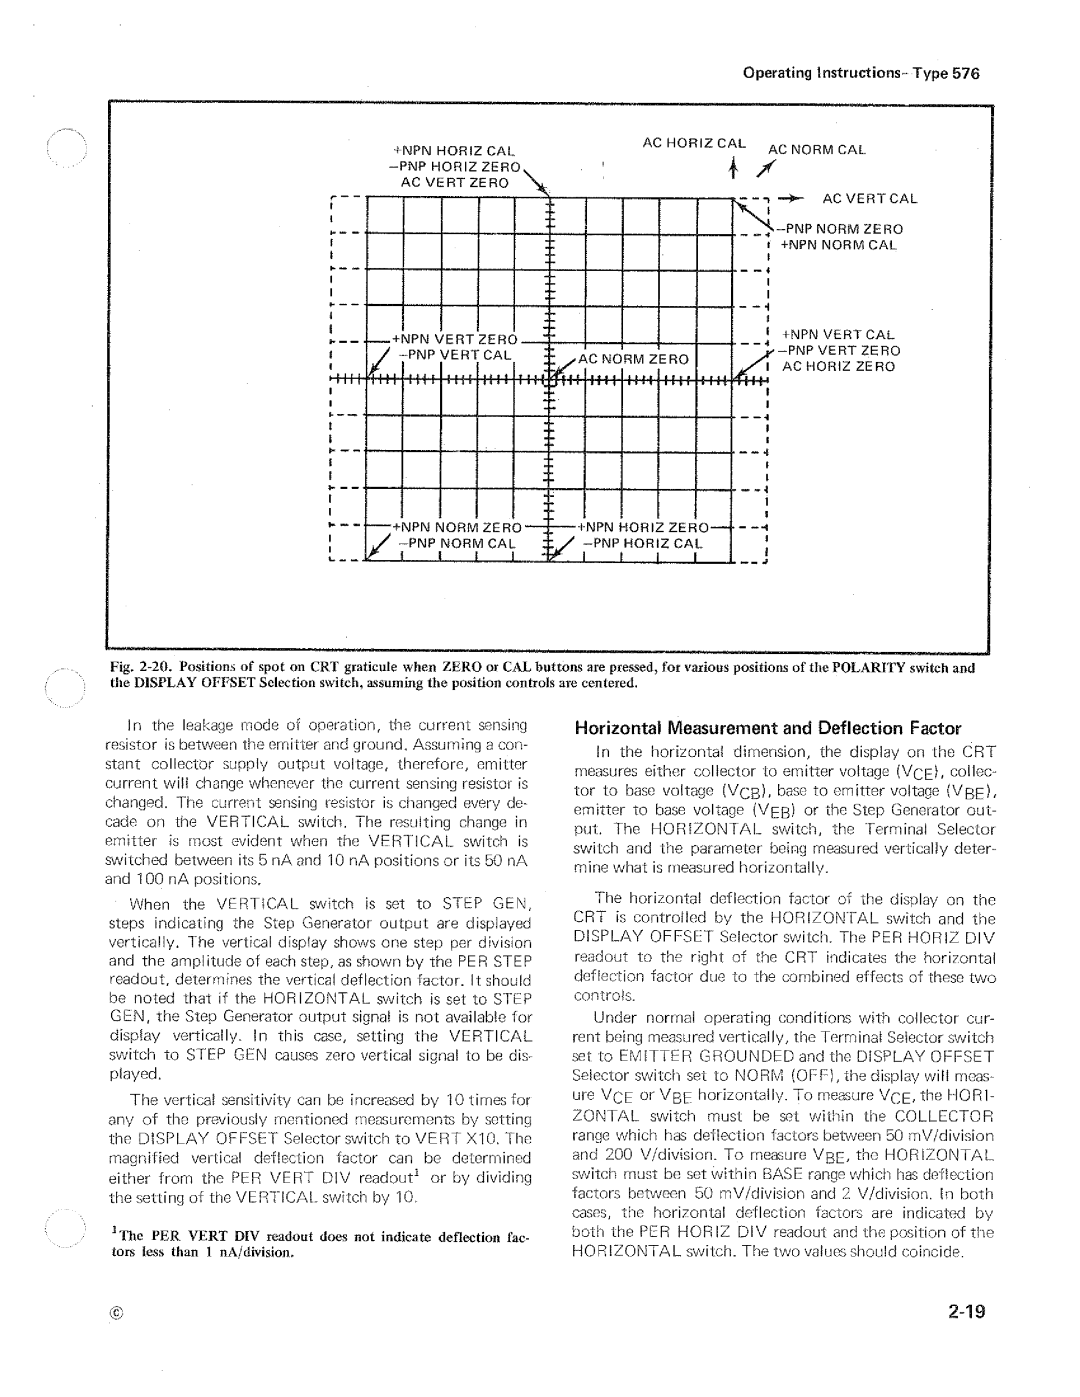 Tektronix 576 manual 